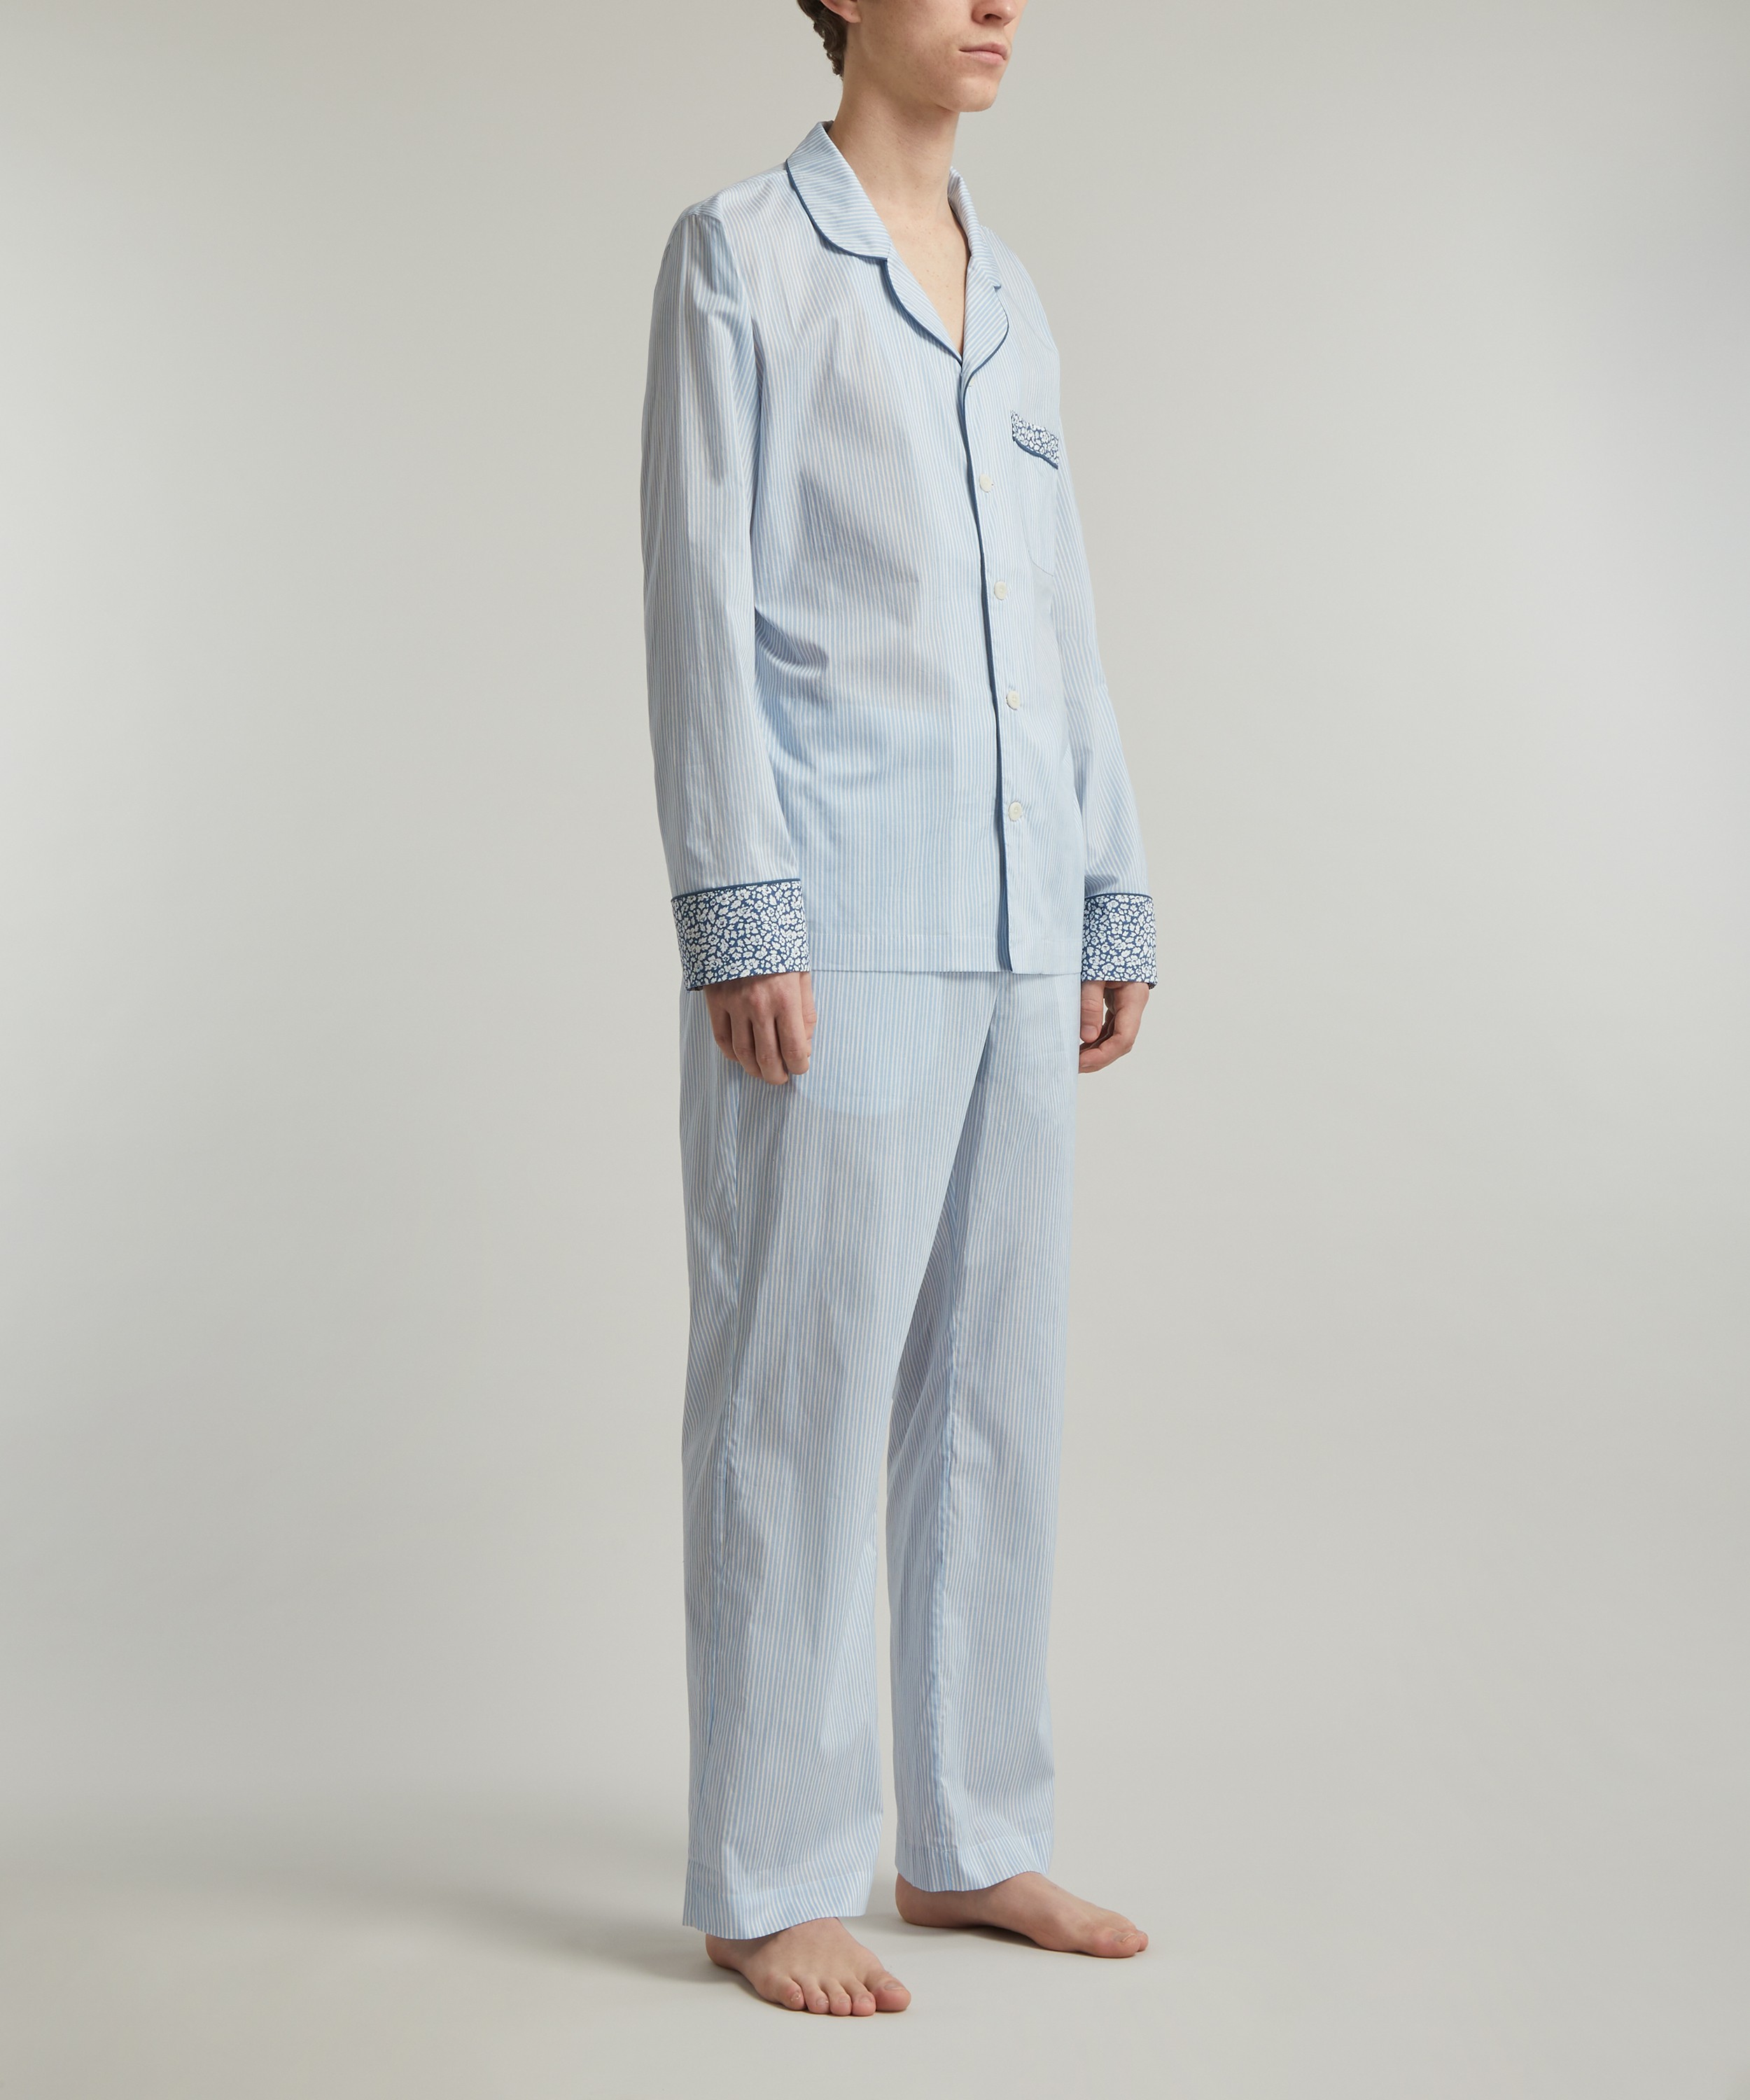 Liberty - Elements Contrast Tana Lawn™ Cotton Pyjama Set image number 2